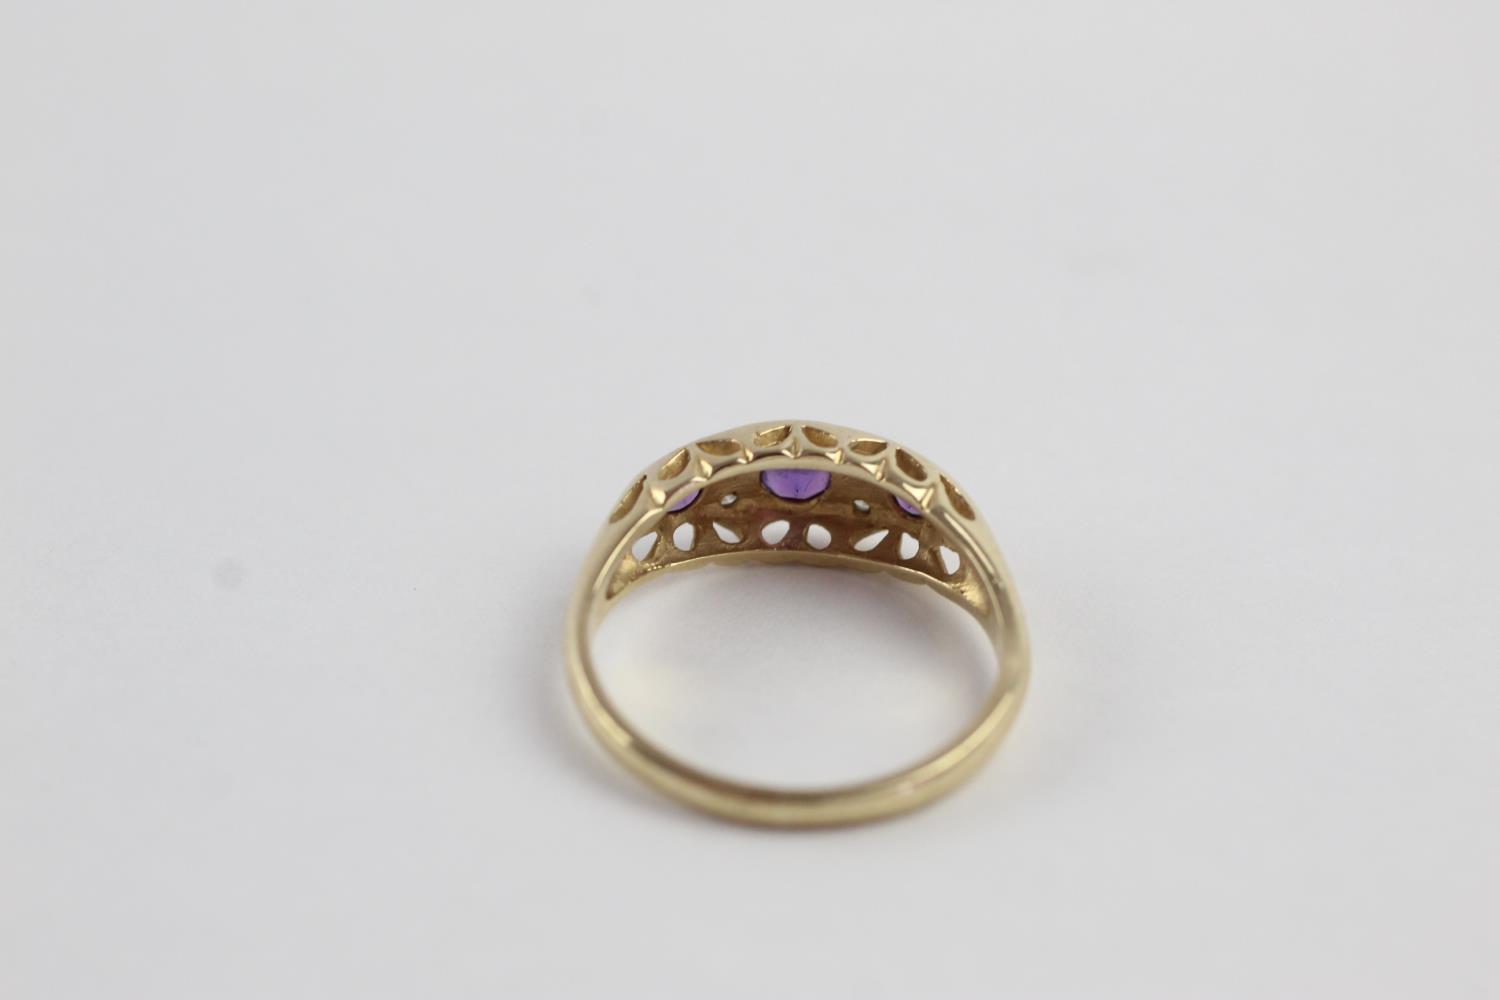 9ct gold amethyst & diamond gypsy ring (2.3g) size N - Image 4 of 7